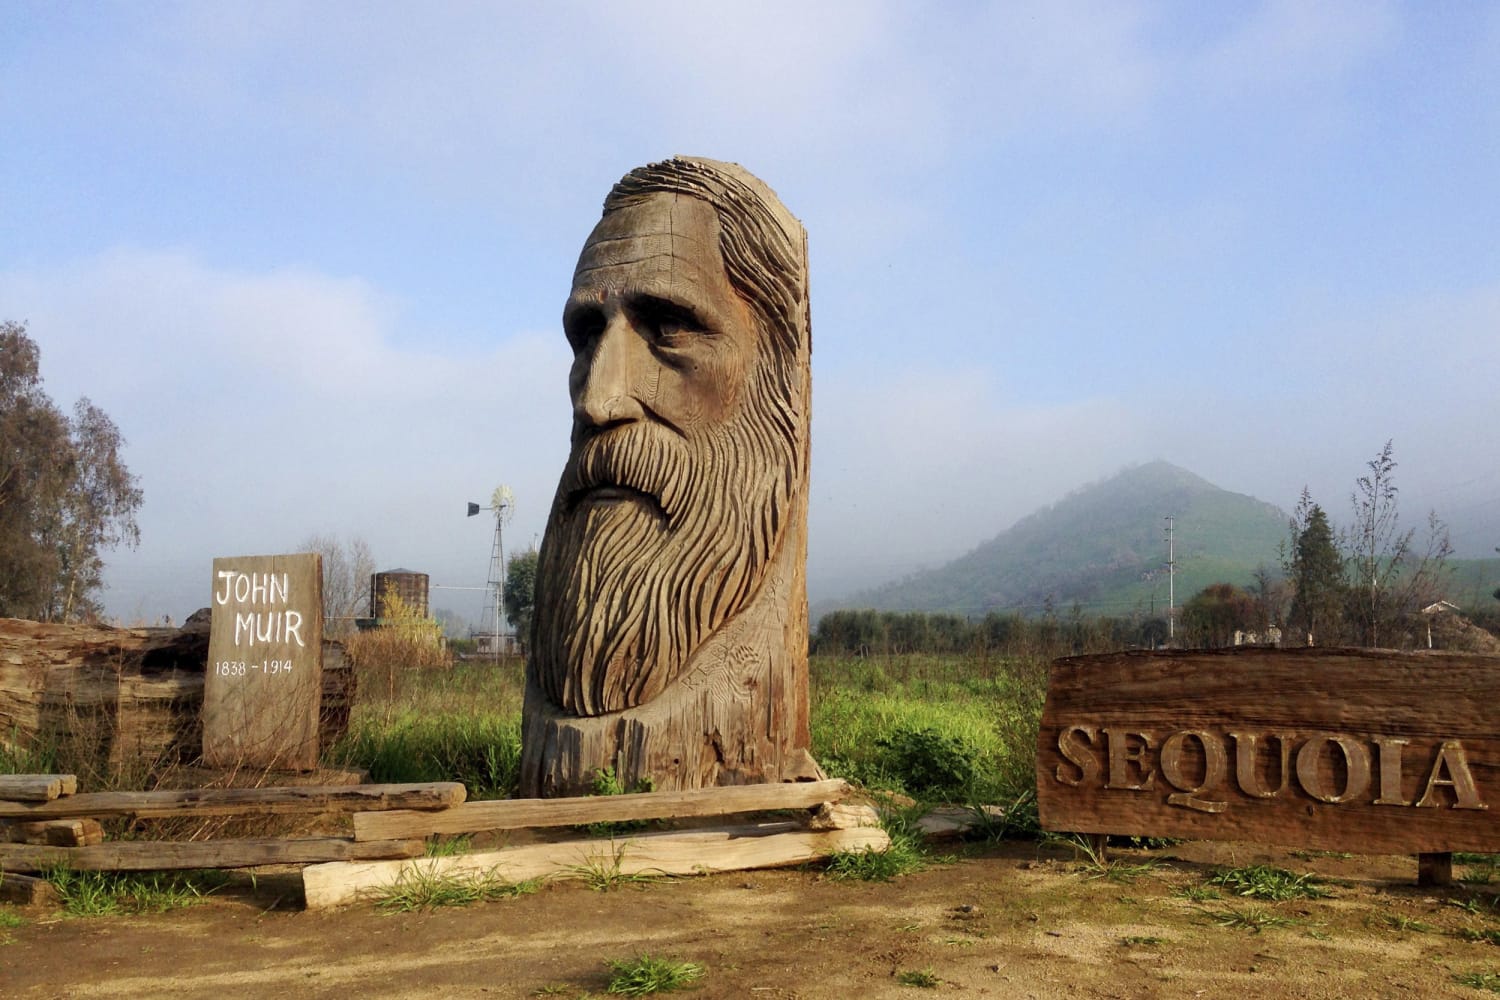 Sierra Club apologizes for founder John Muir's racist views